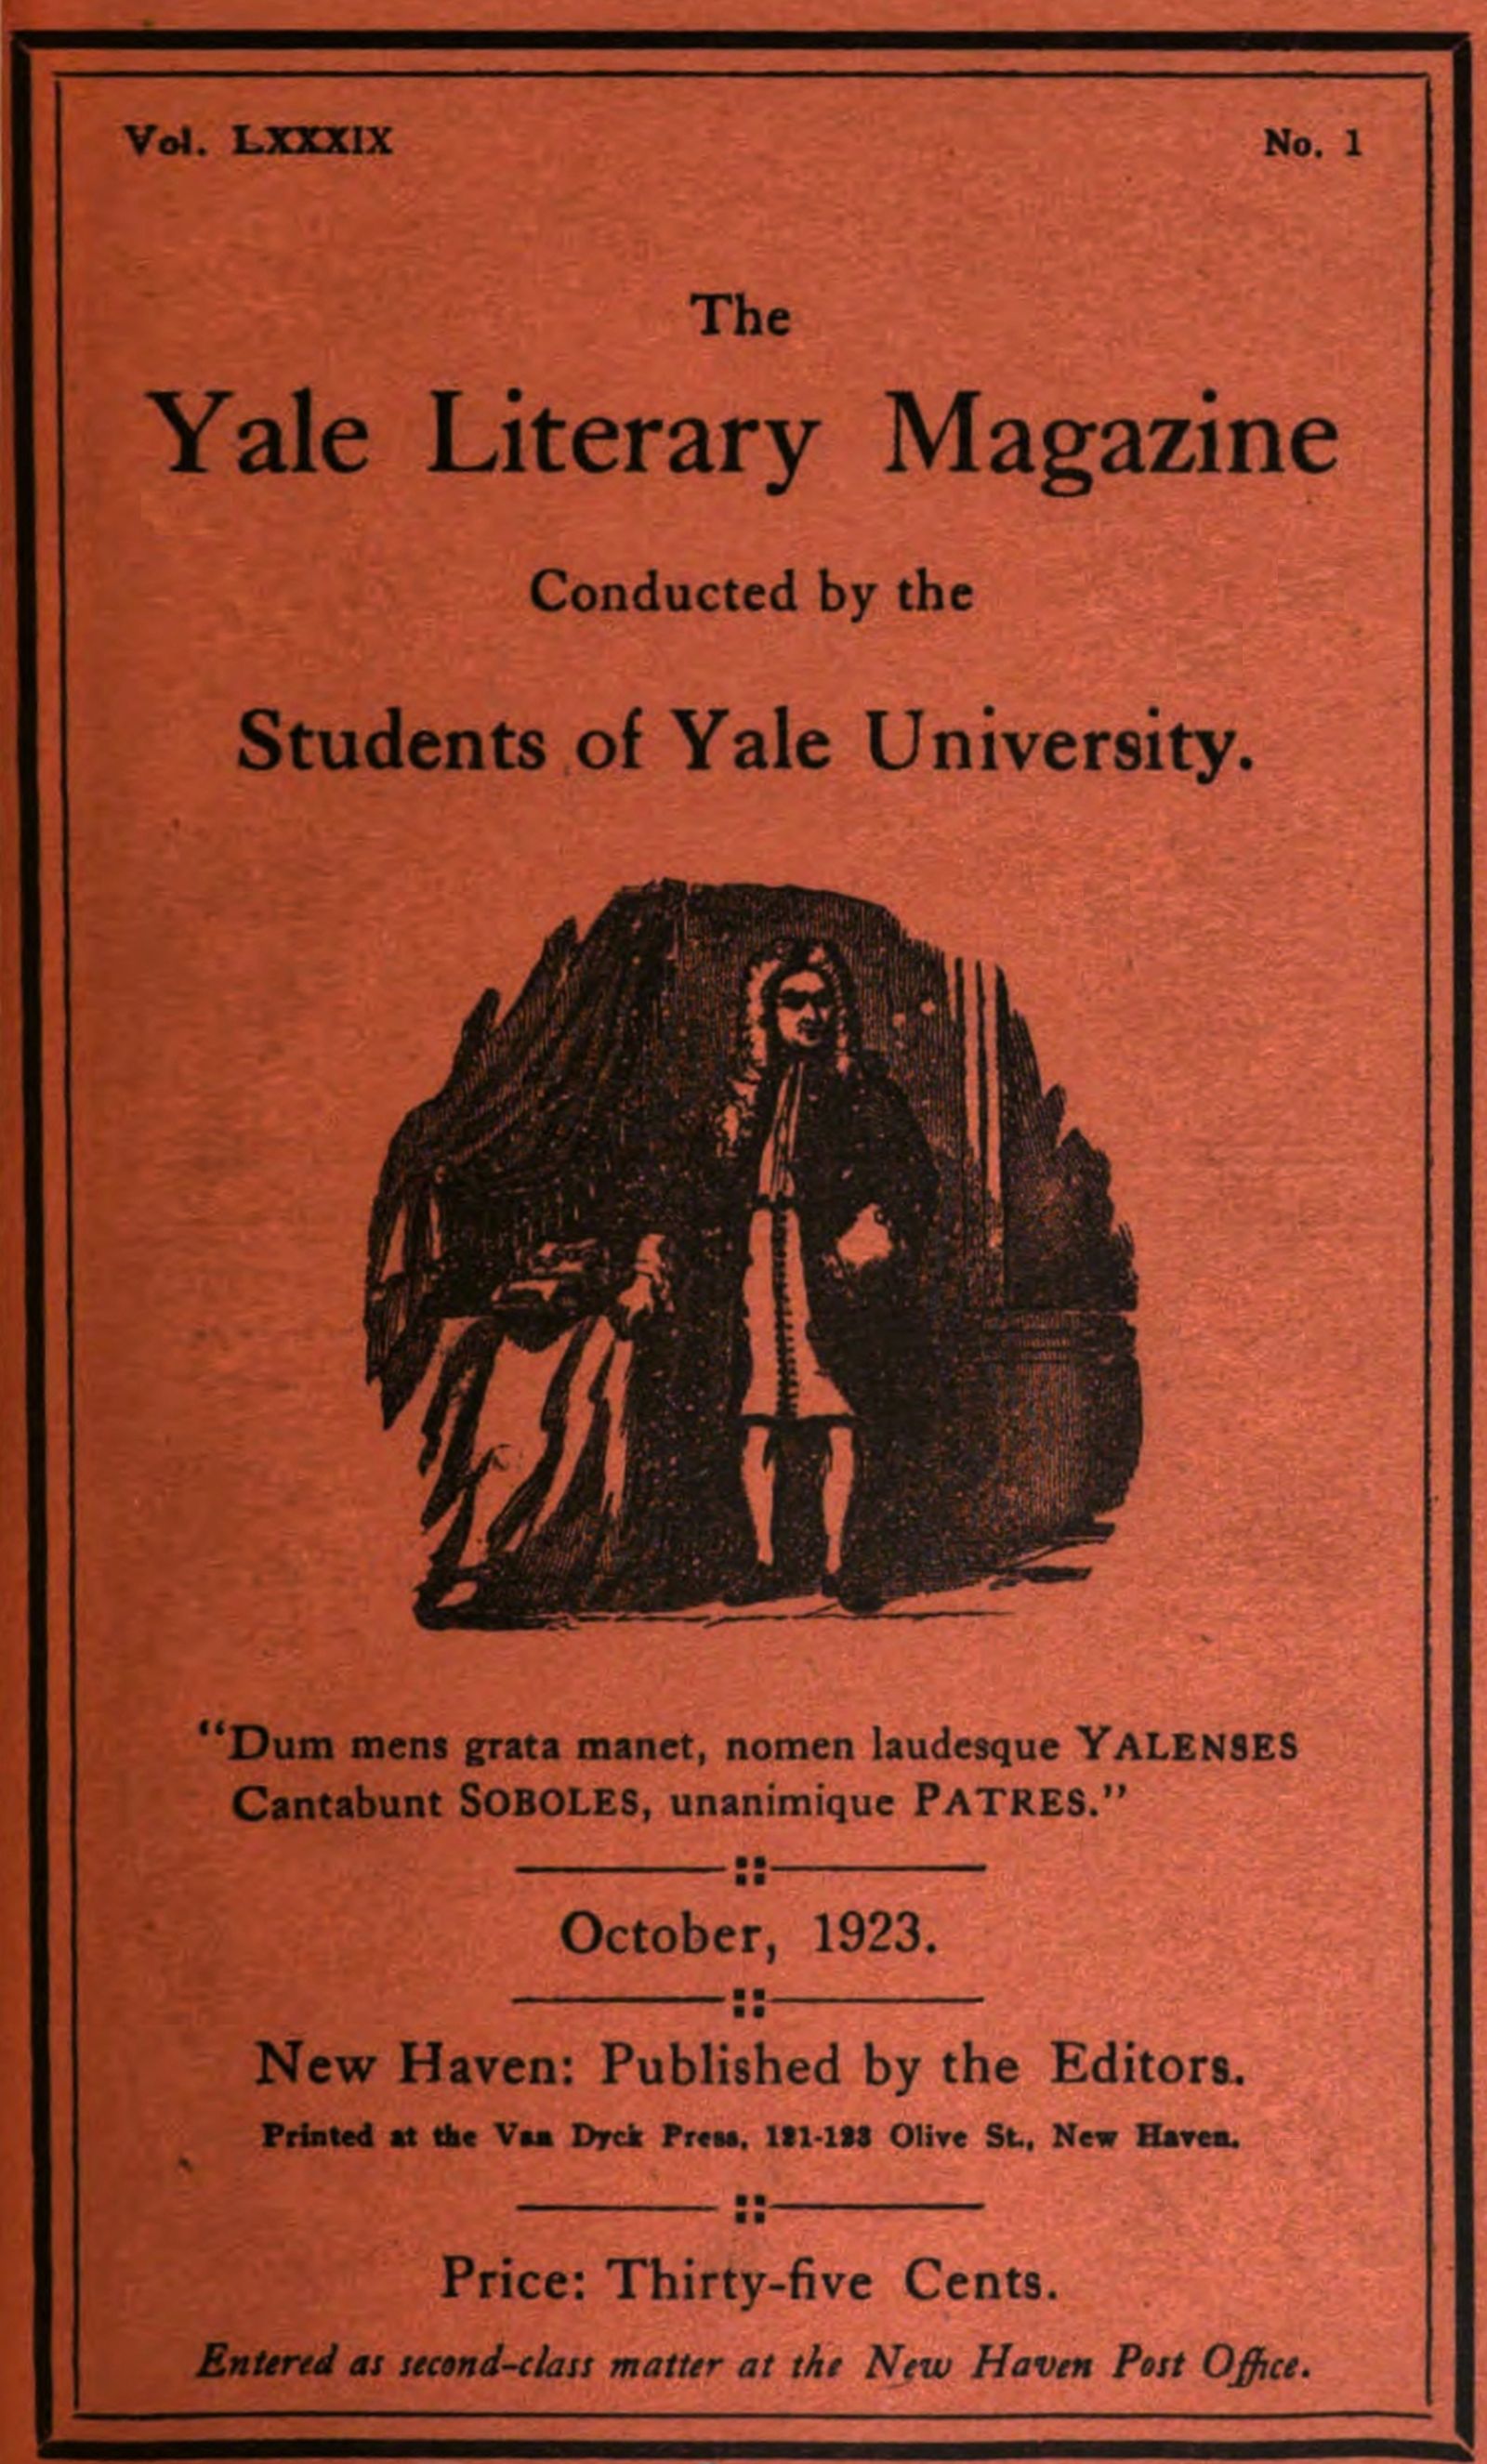 Yale Edebiyat Dergisi (Cilt LXXXIX, No. 1, 1923)